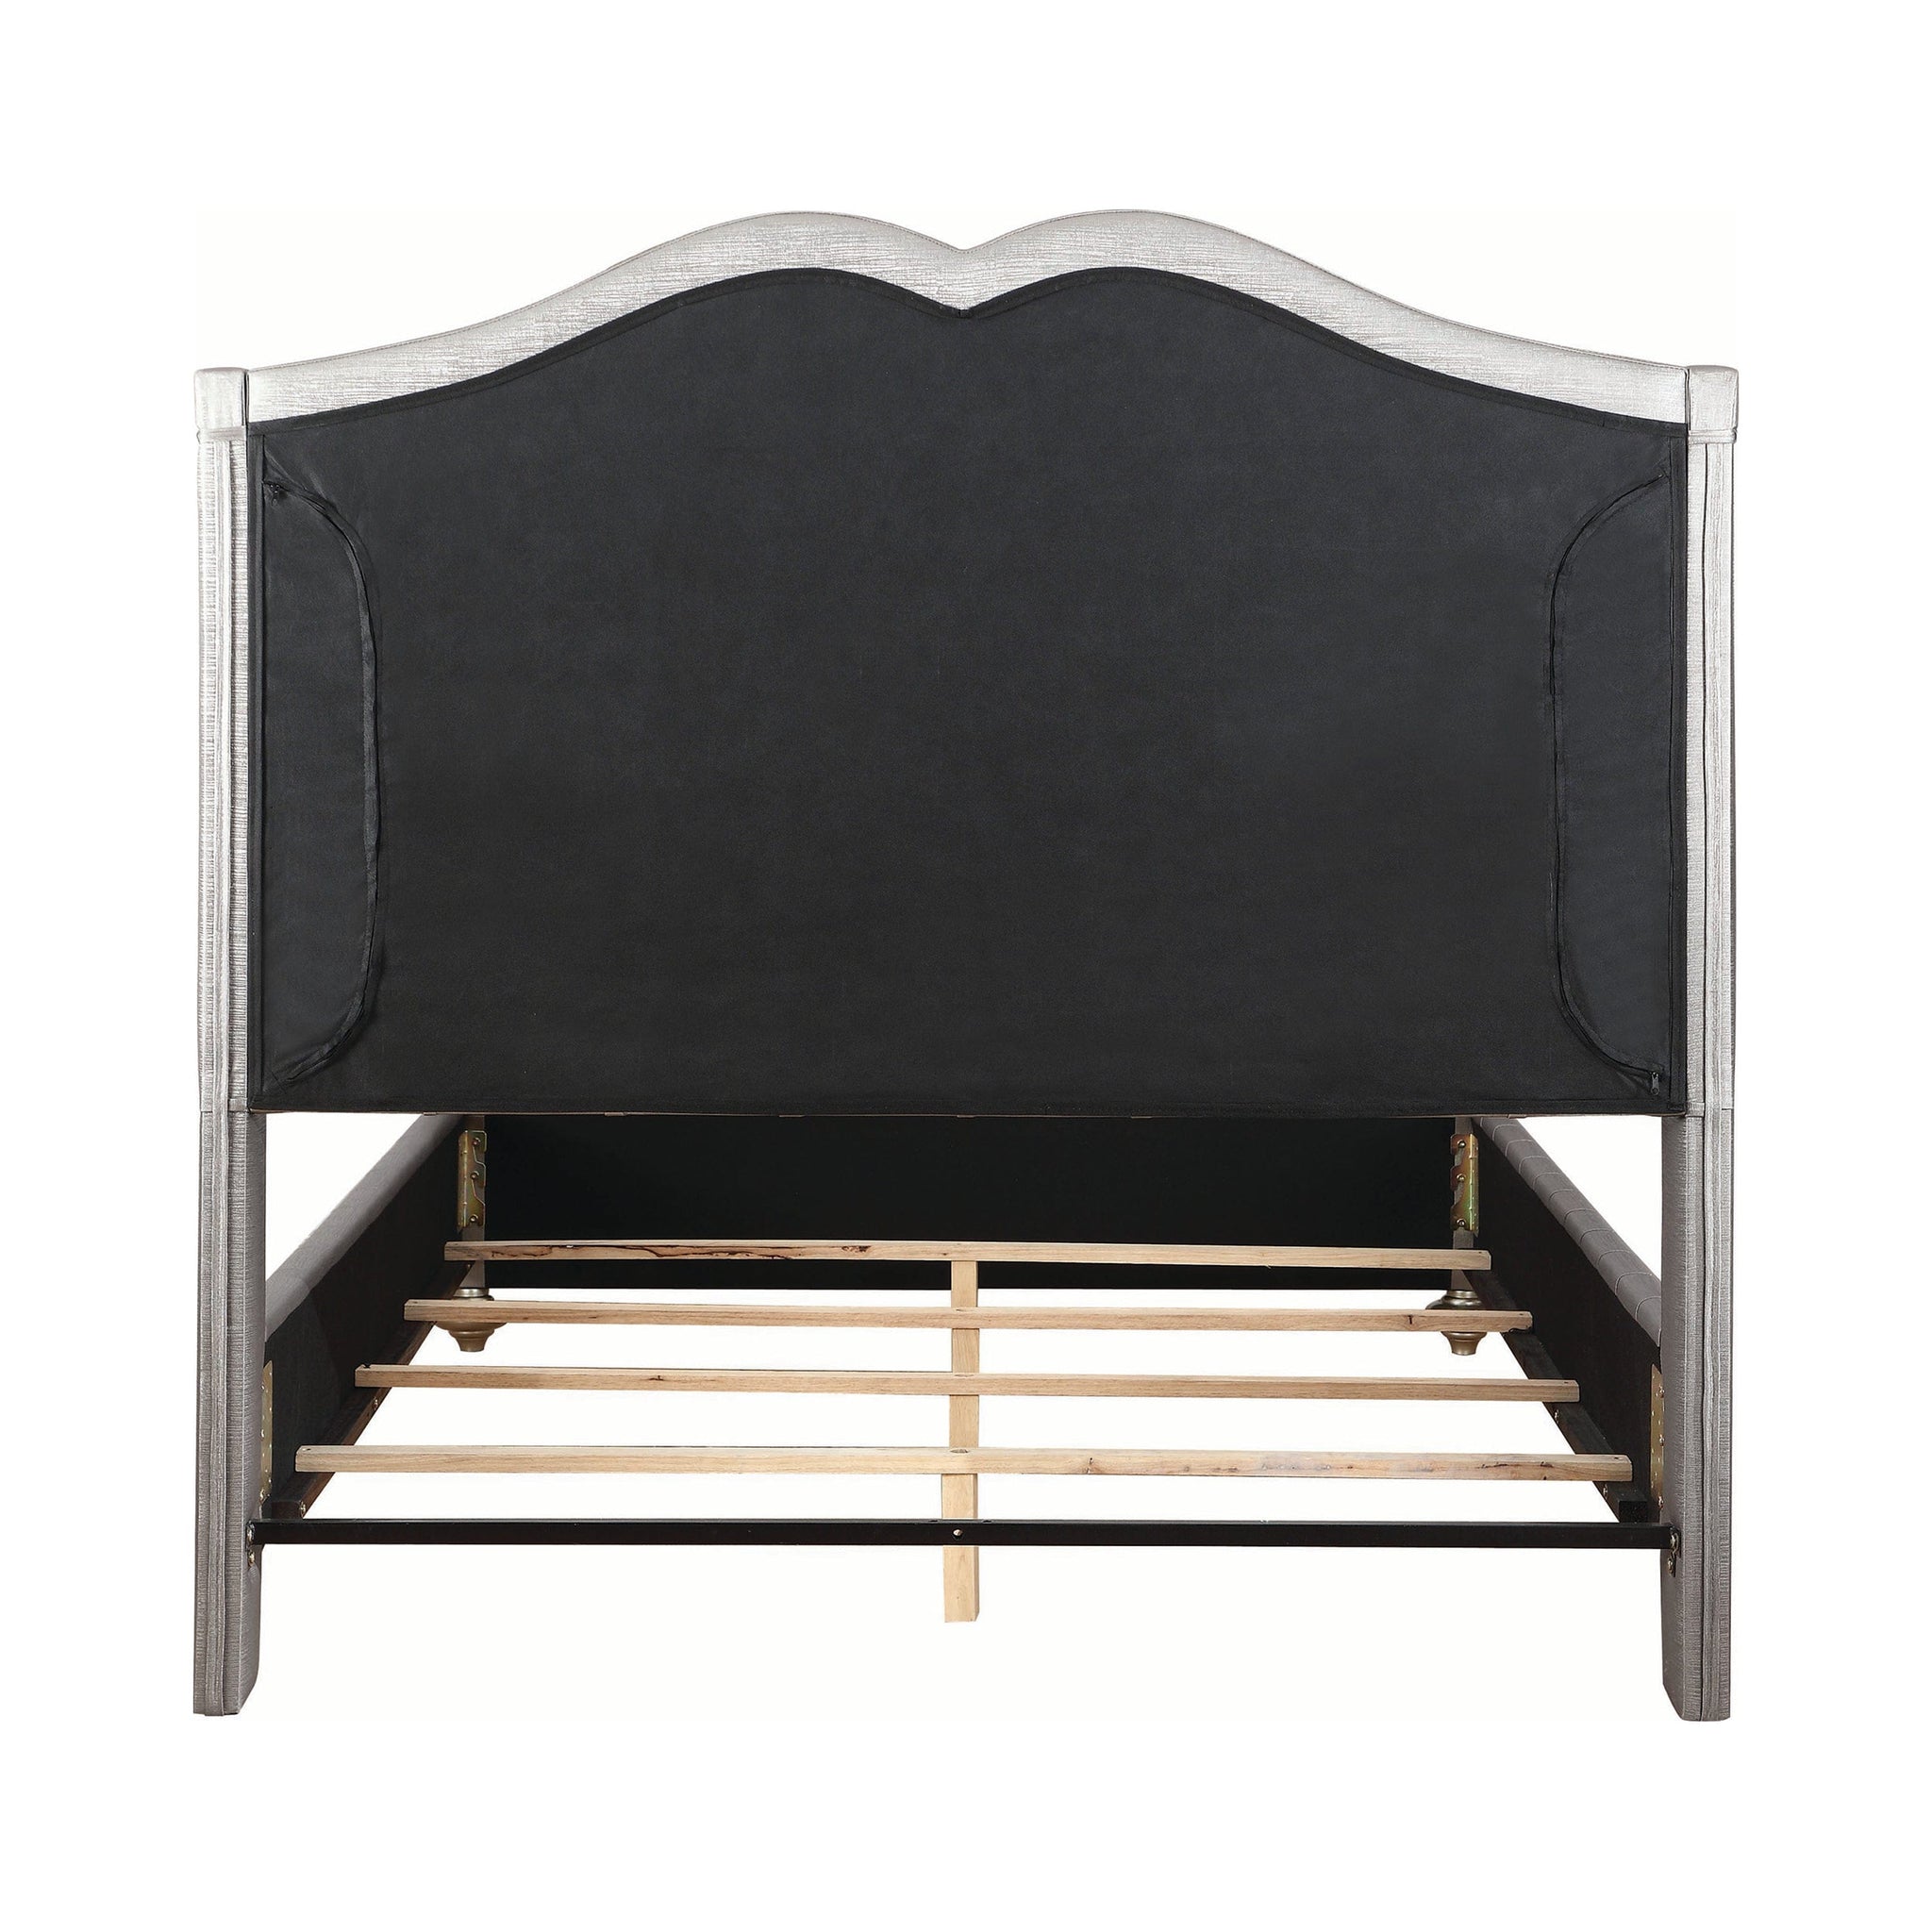 Belmont Tufted Upholstered Eastern King Bed Metallic - 300824KE